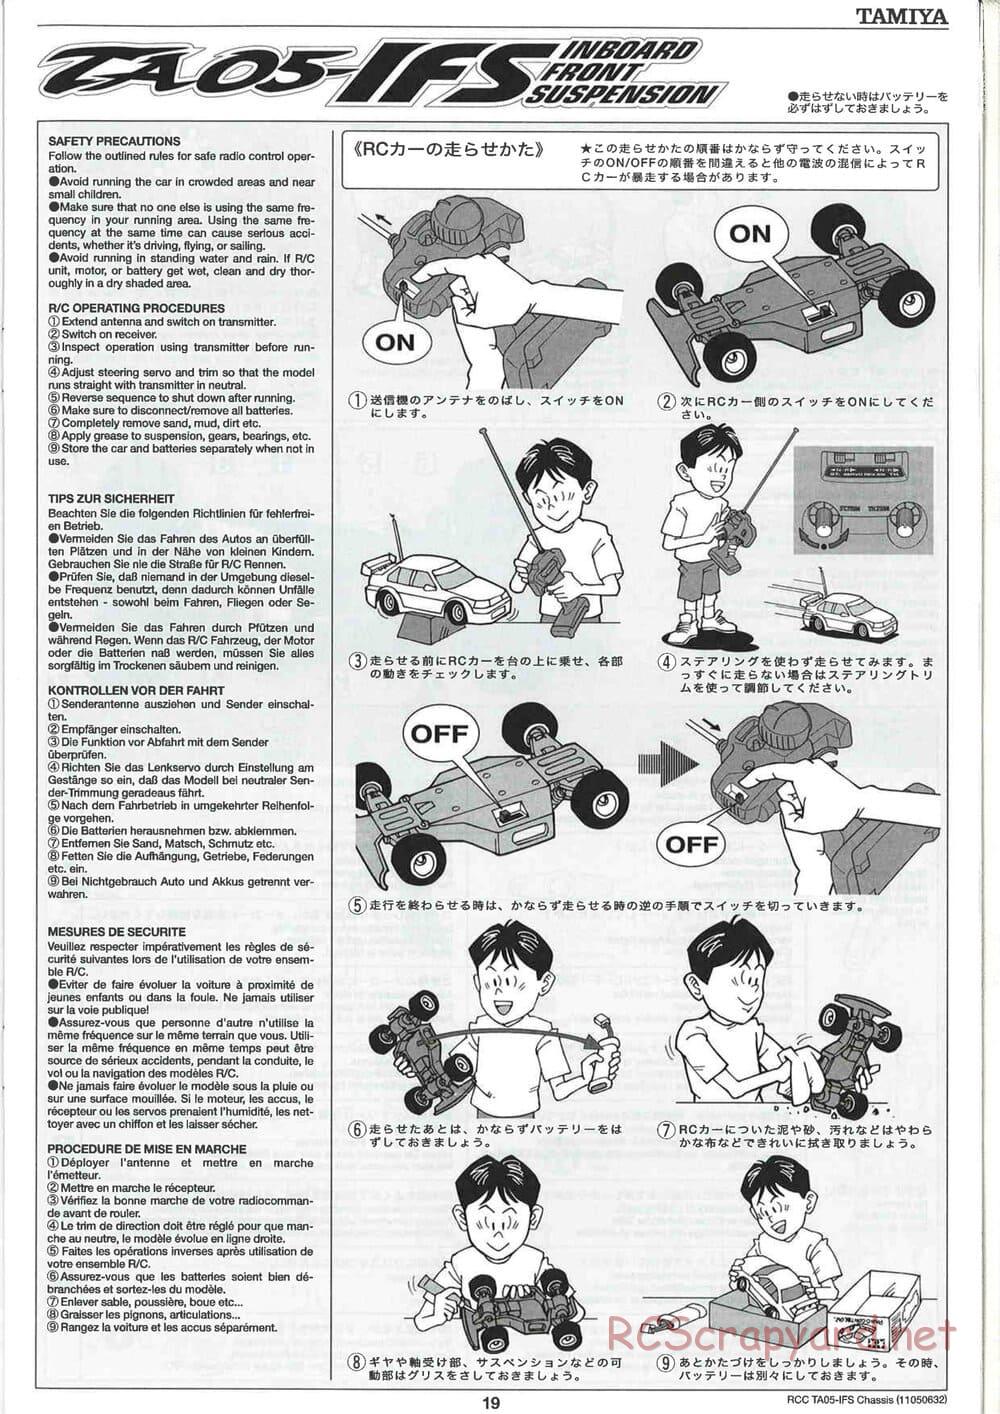 Tamiya - TA05-IFS Chassis - Manual - Page 19